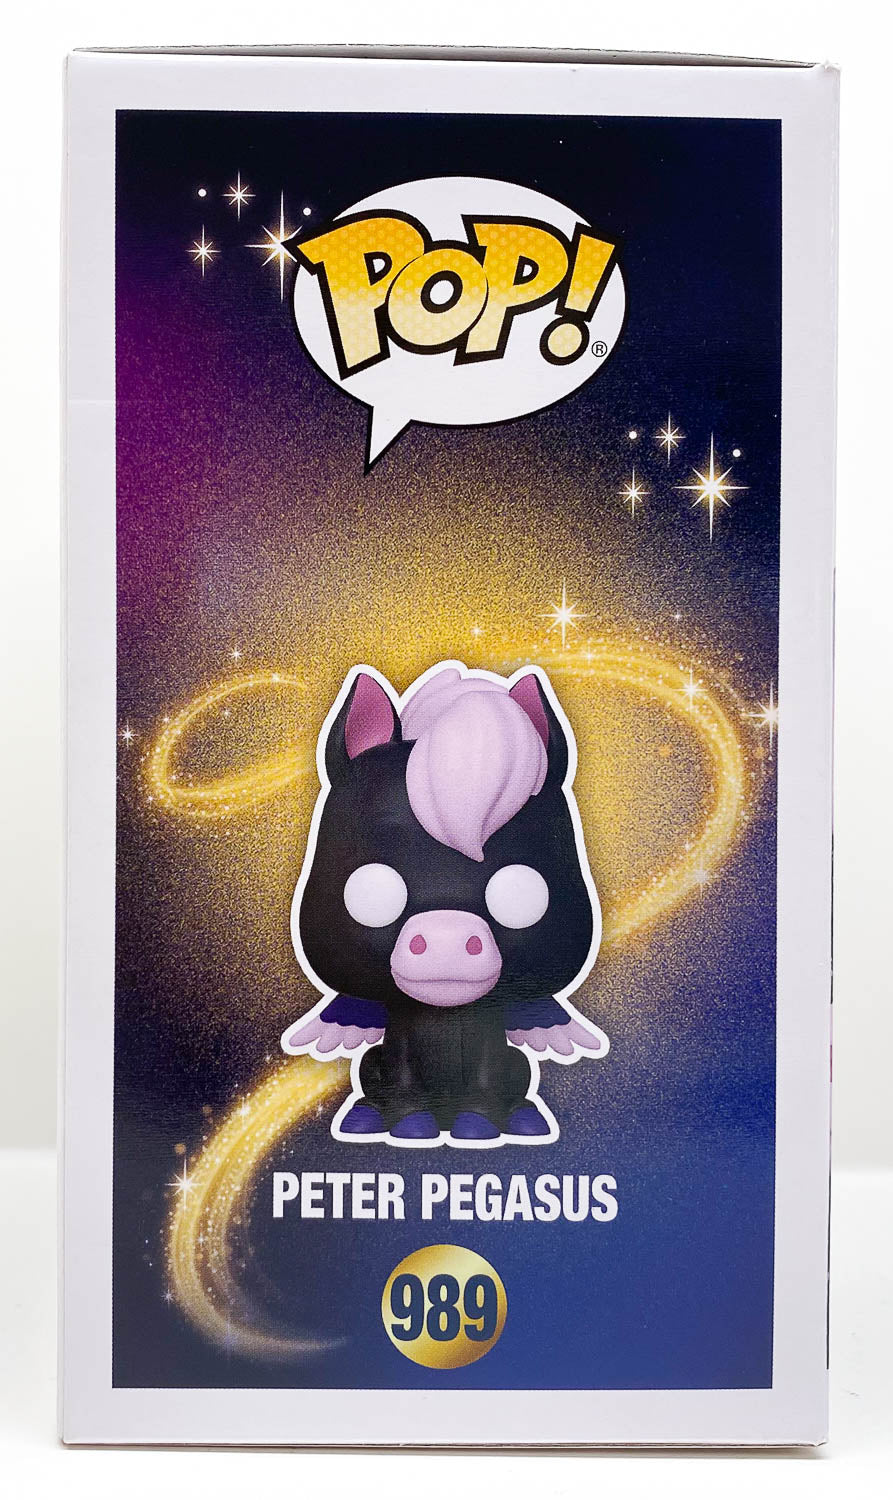 Peter Pegasus by Funko Pop - Disney Fantasia